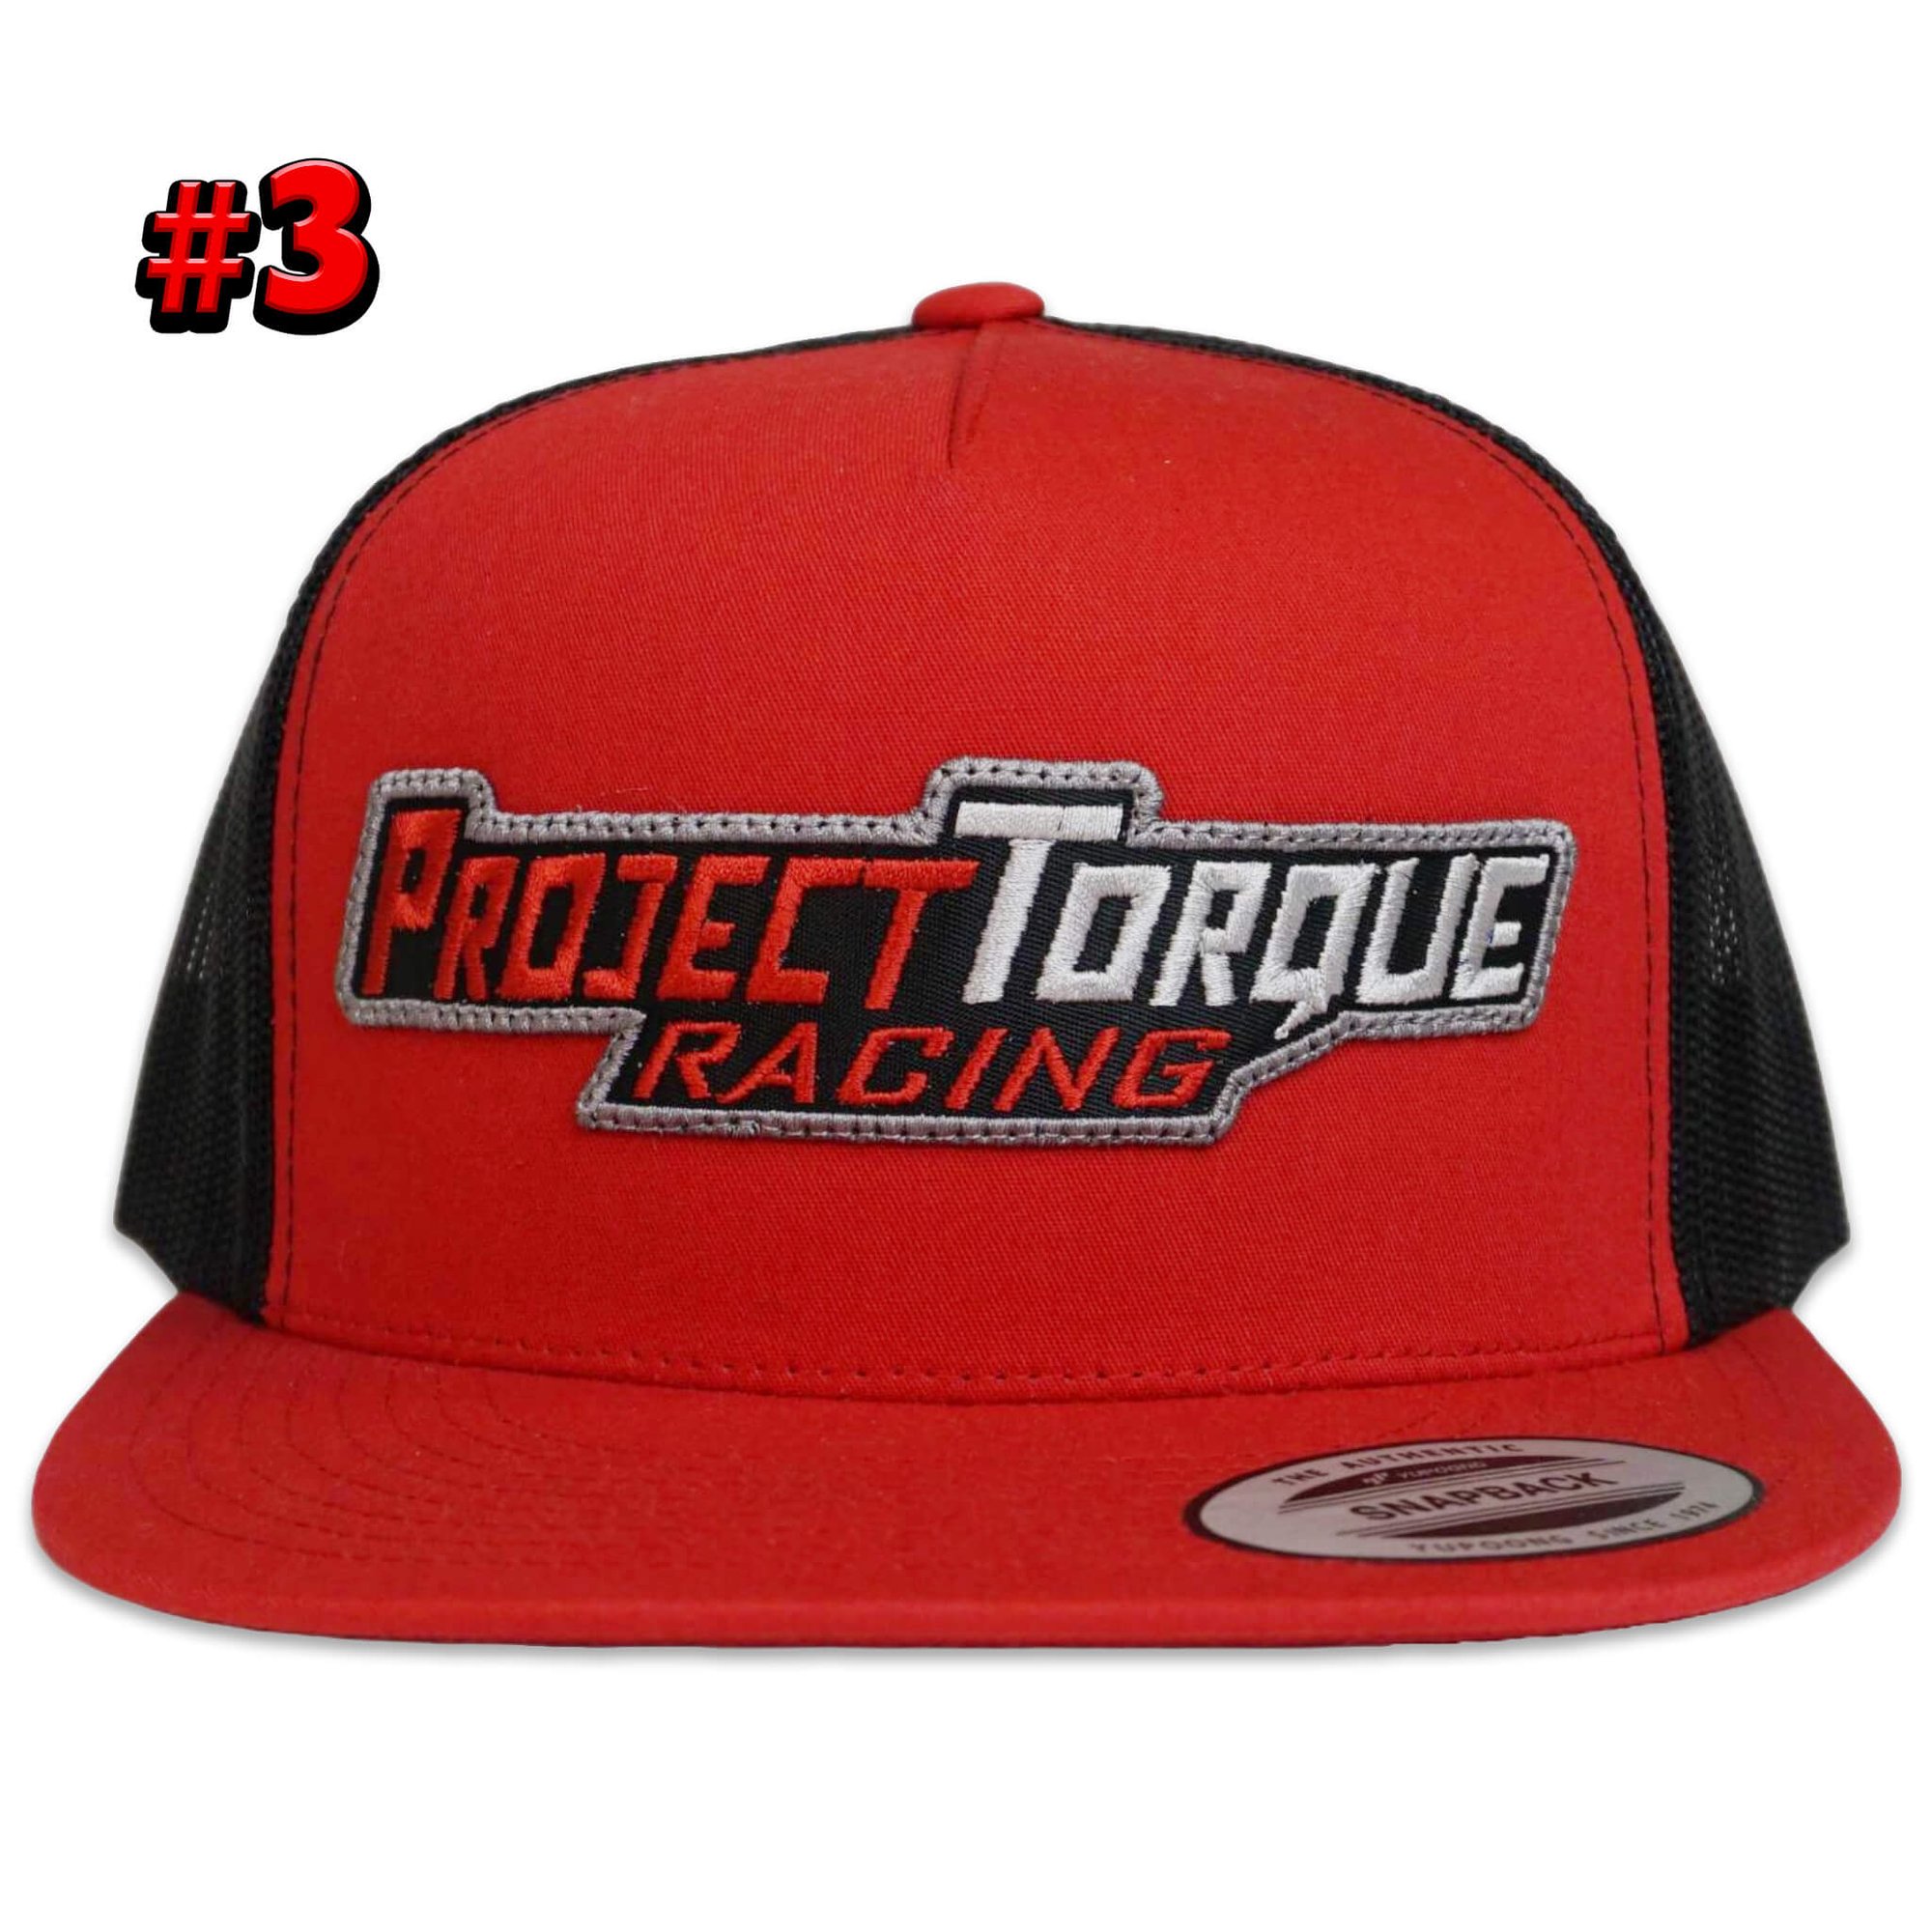 Project Torque Racing Hats | Project Torque